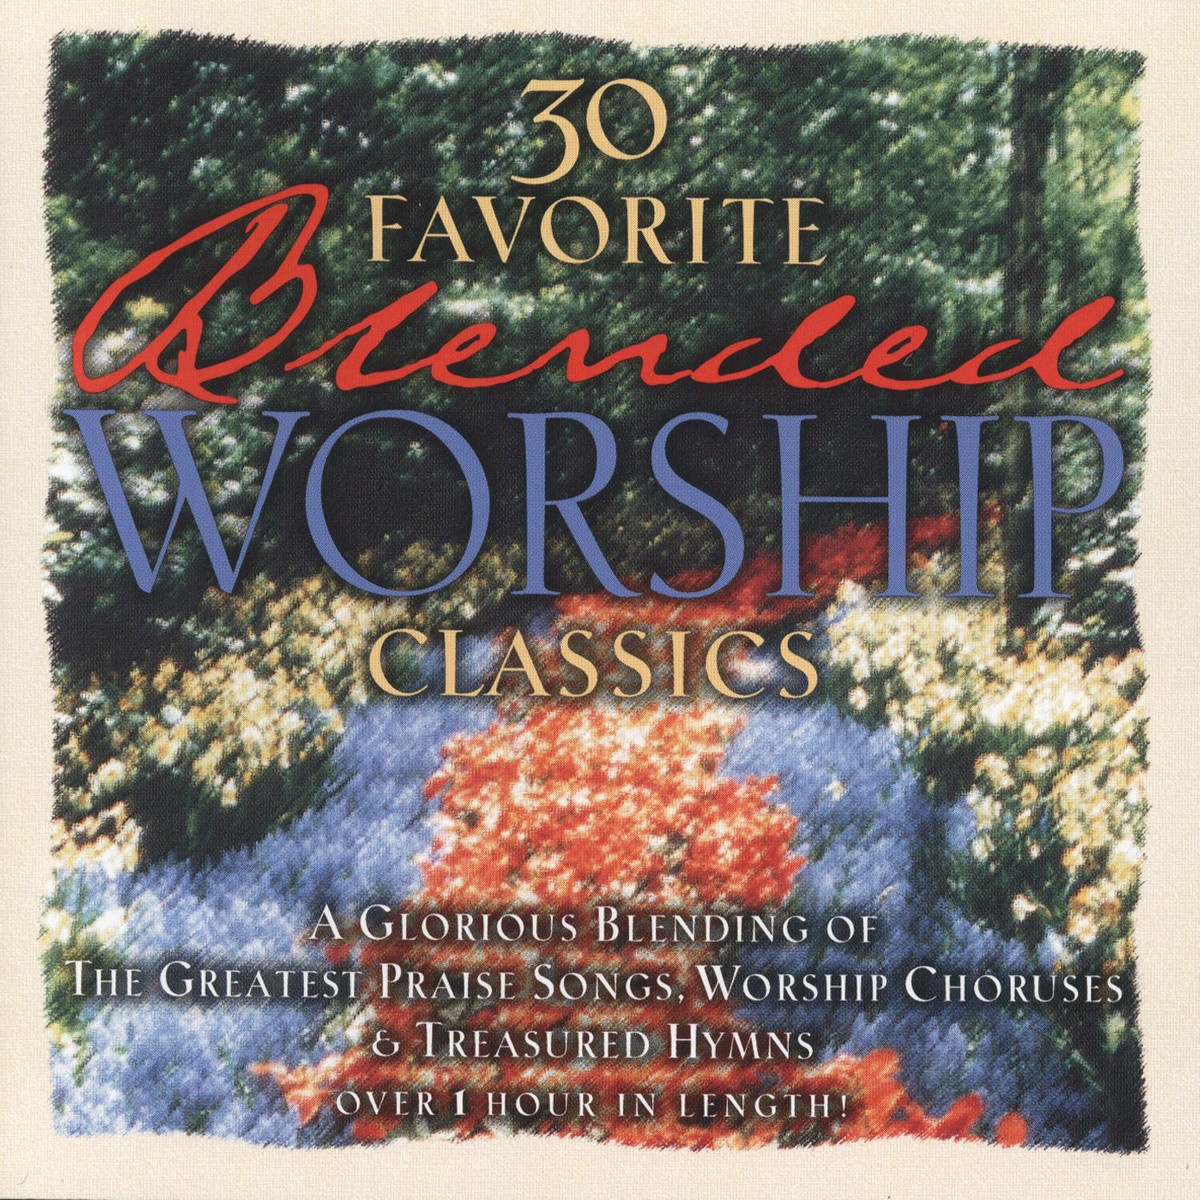 30 Favorite Blended Worship Classics